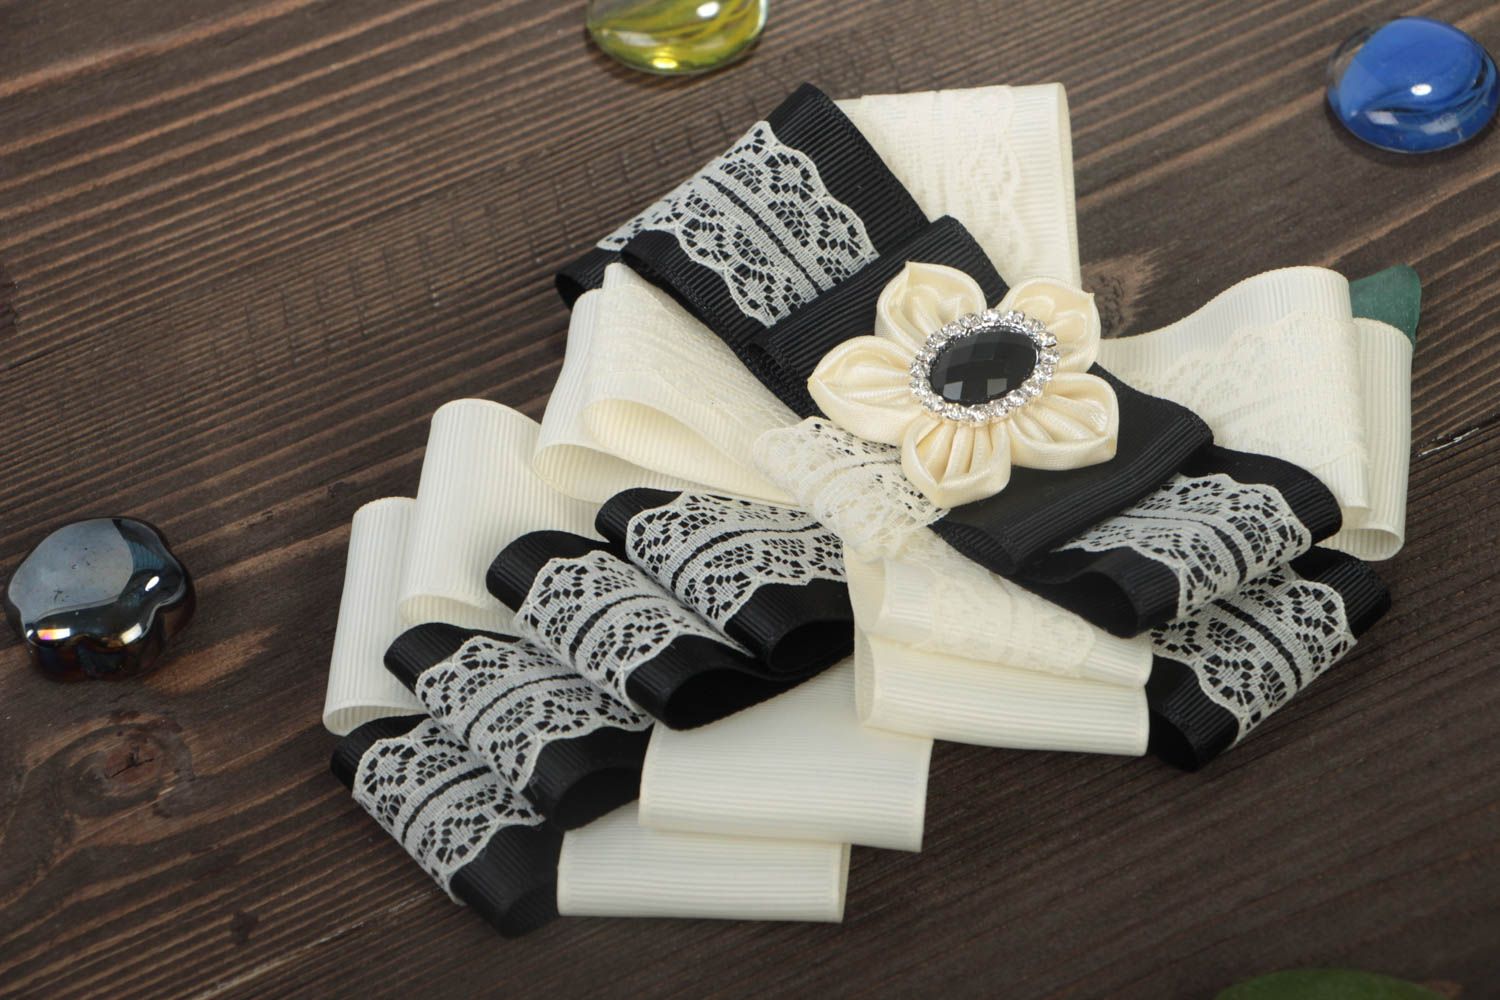 Grande broche noeud blanc noir en rubans de satin avec dentelle faite main photo 1